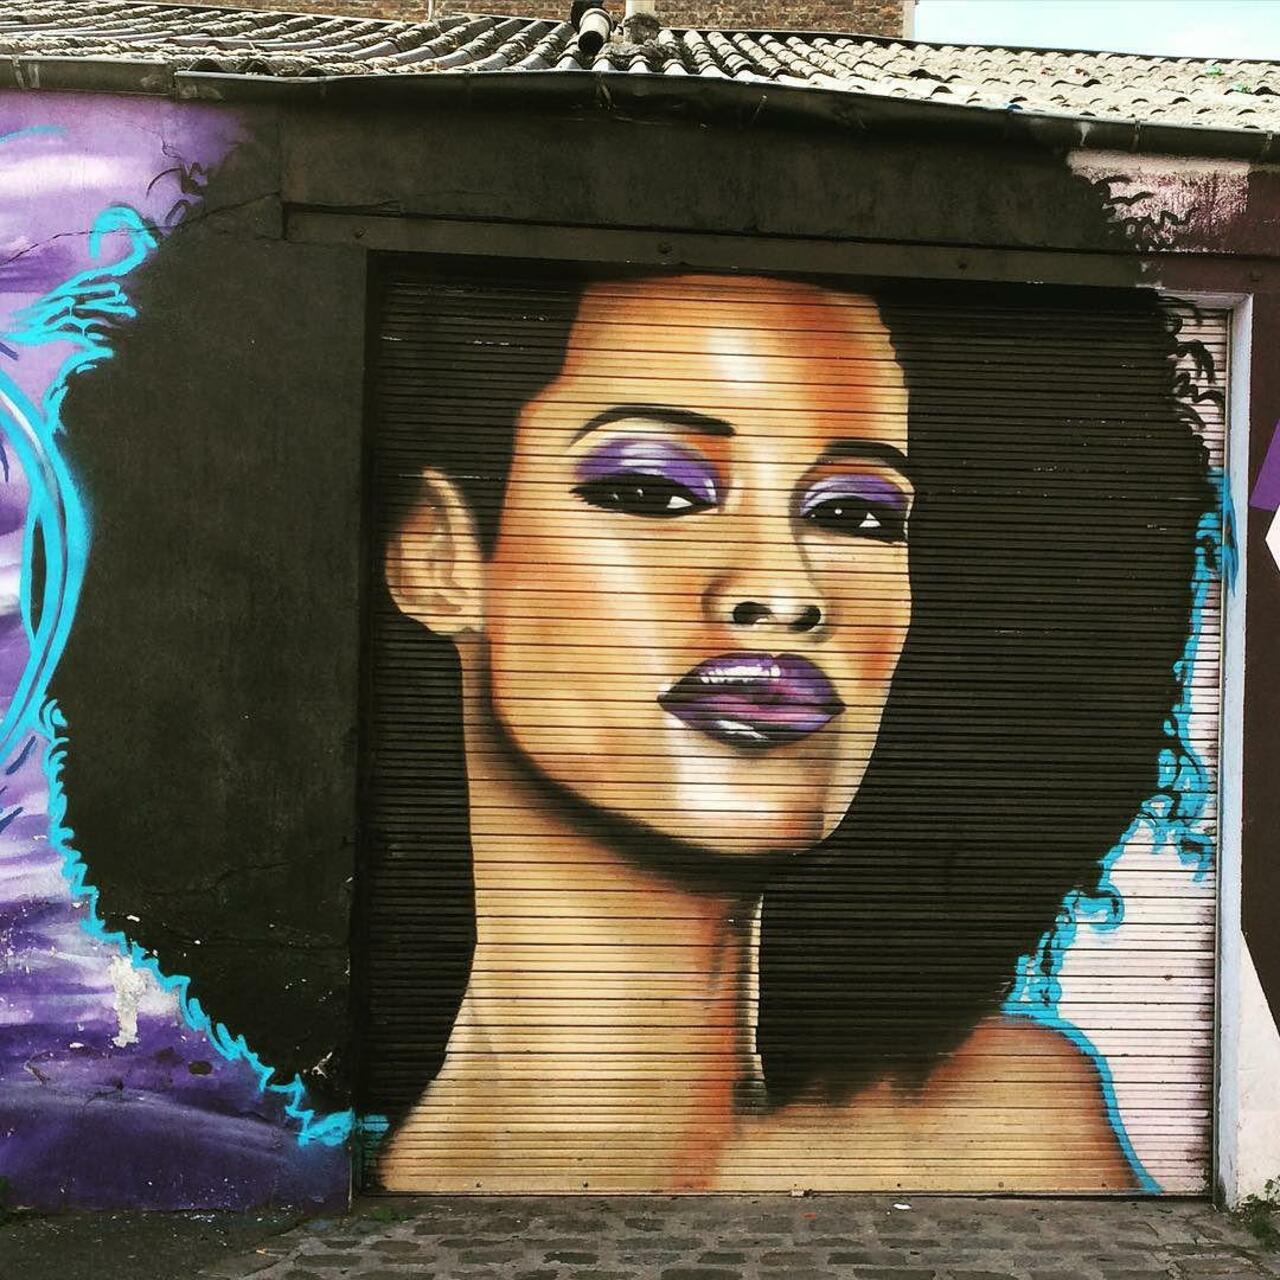 RT @circumjacent_fr: #Paris #graffiti photo by @elricoelmagnifico http://ift.tt/1jvY7J8 #StreetArt http://t.co/dYHSkBO4In